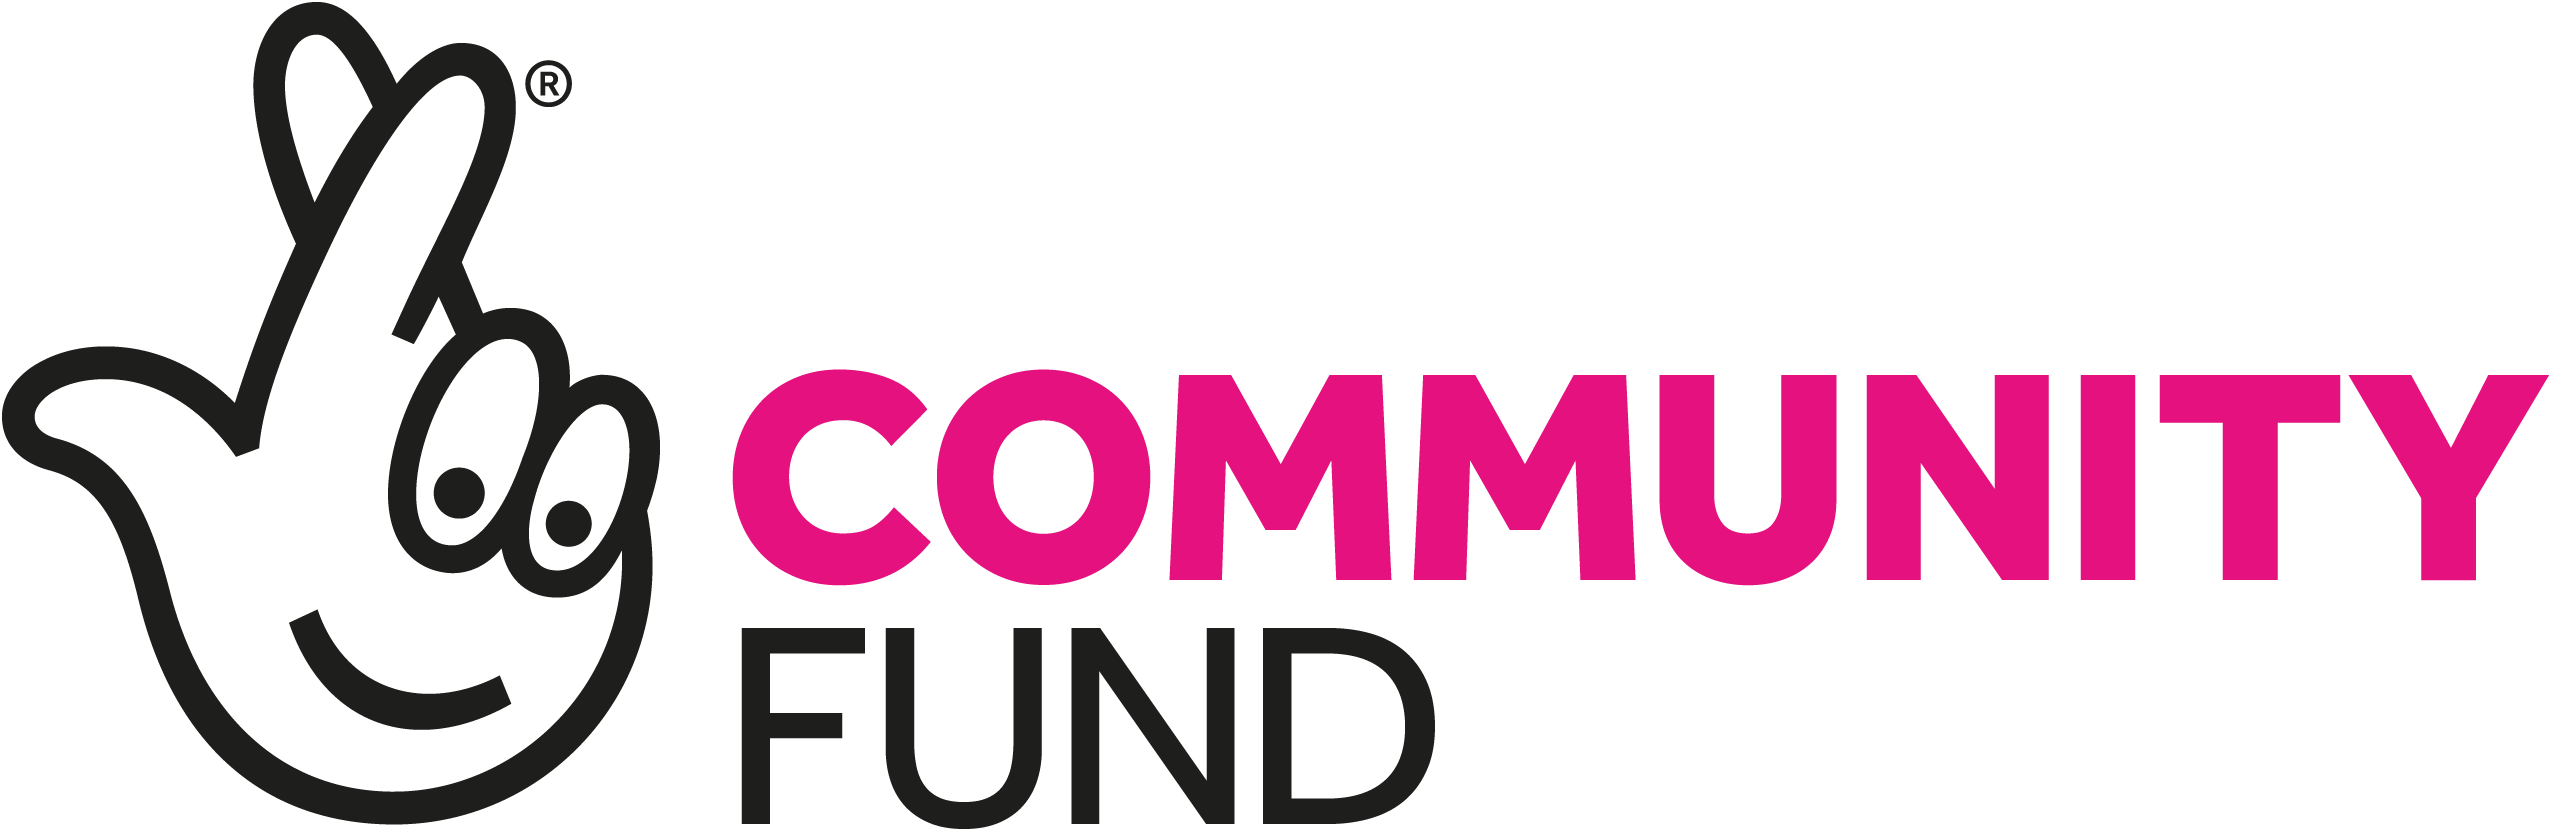 Lottery Community Fund logo